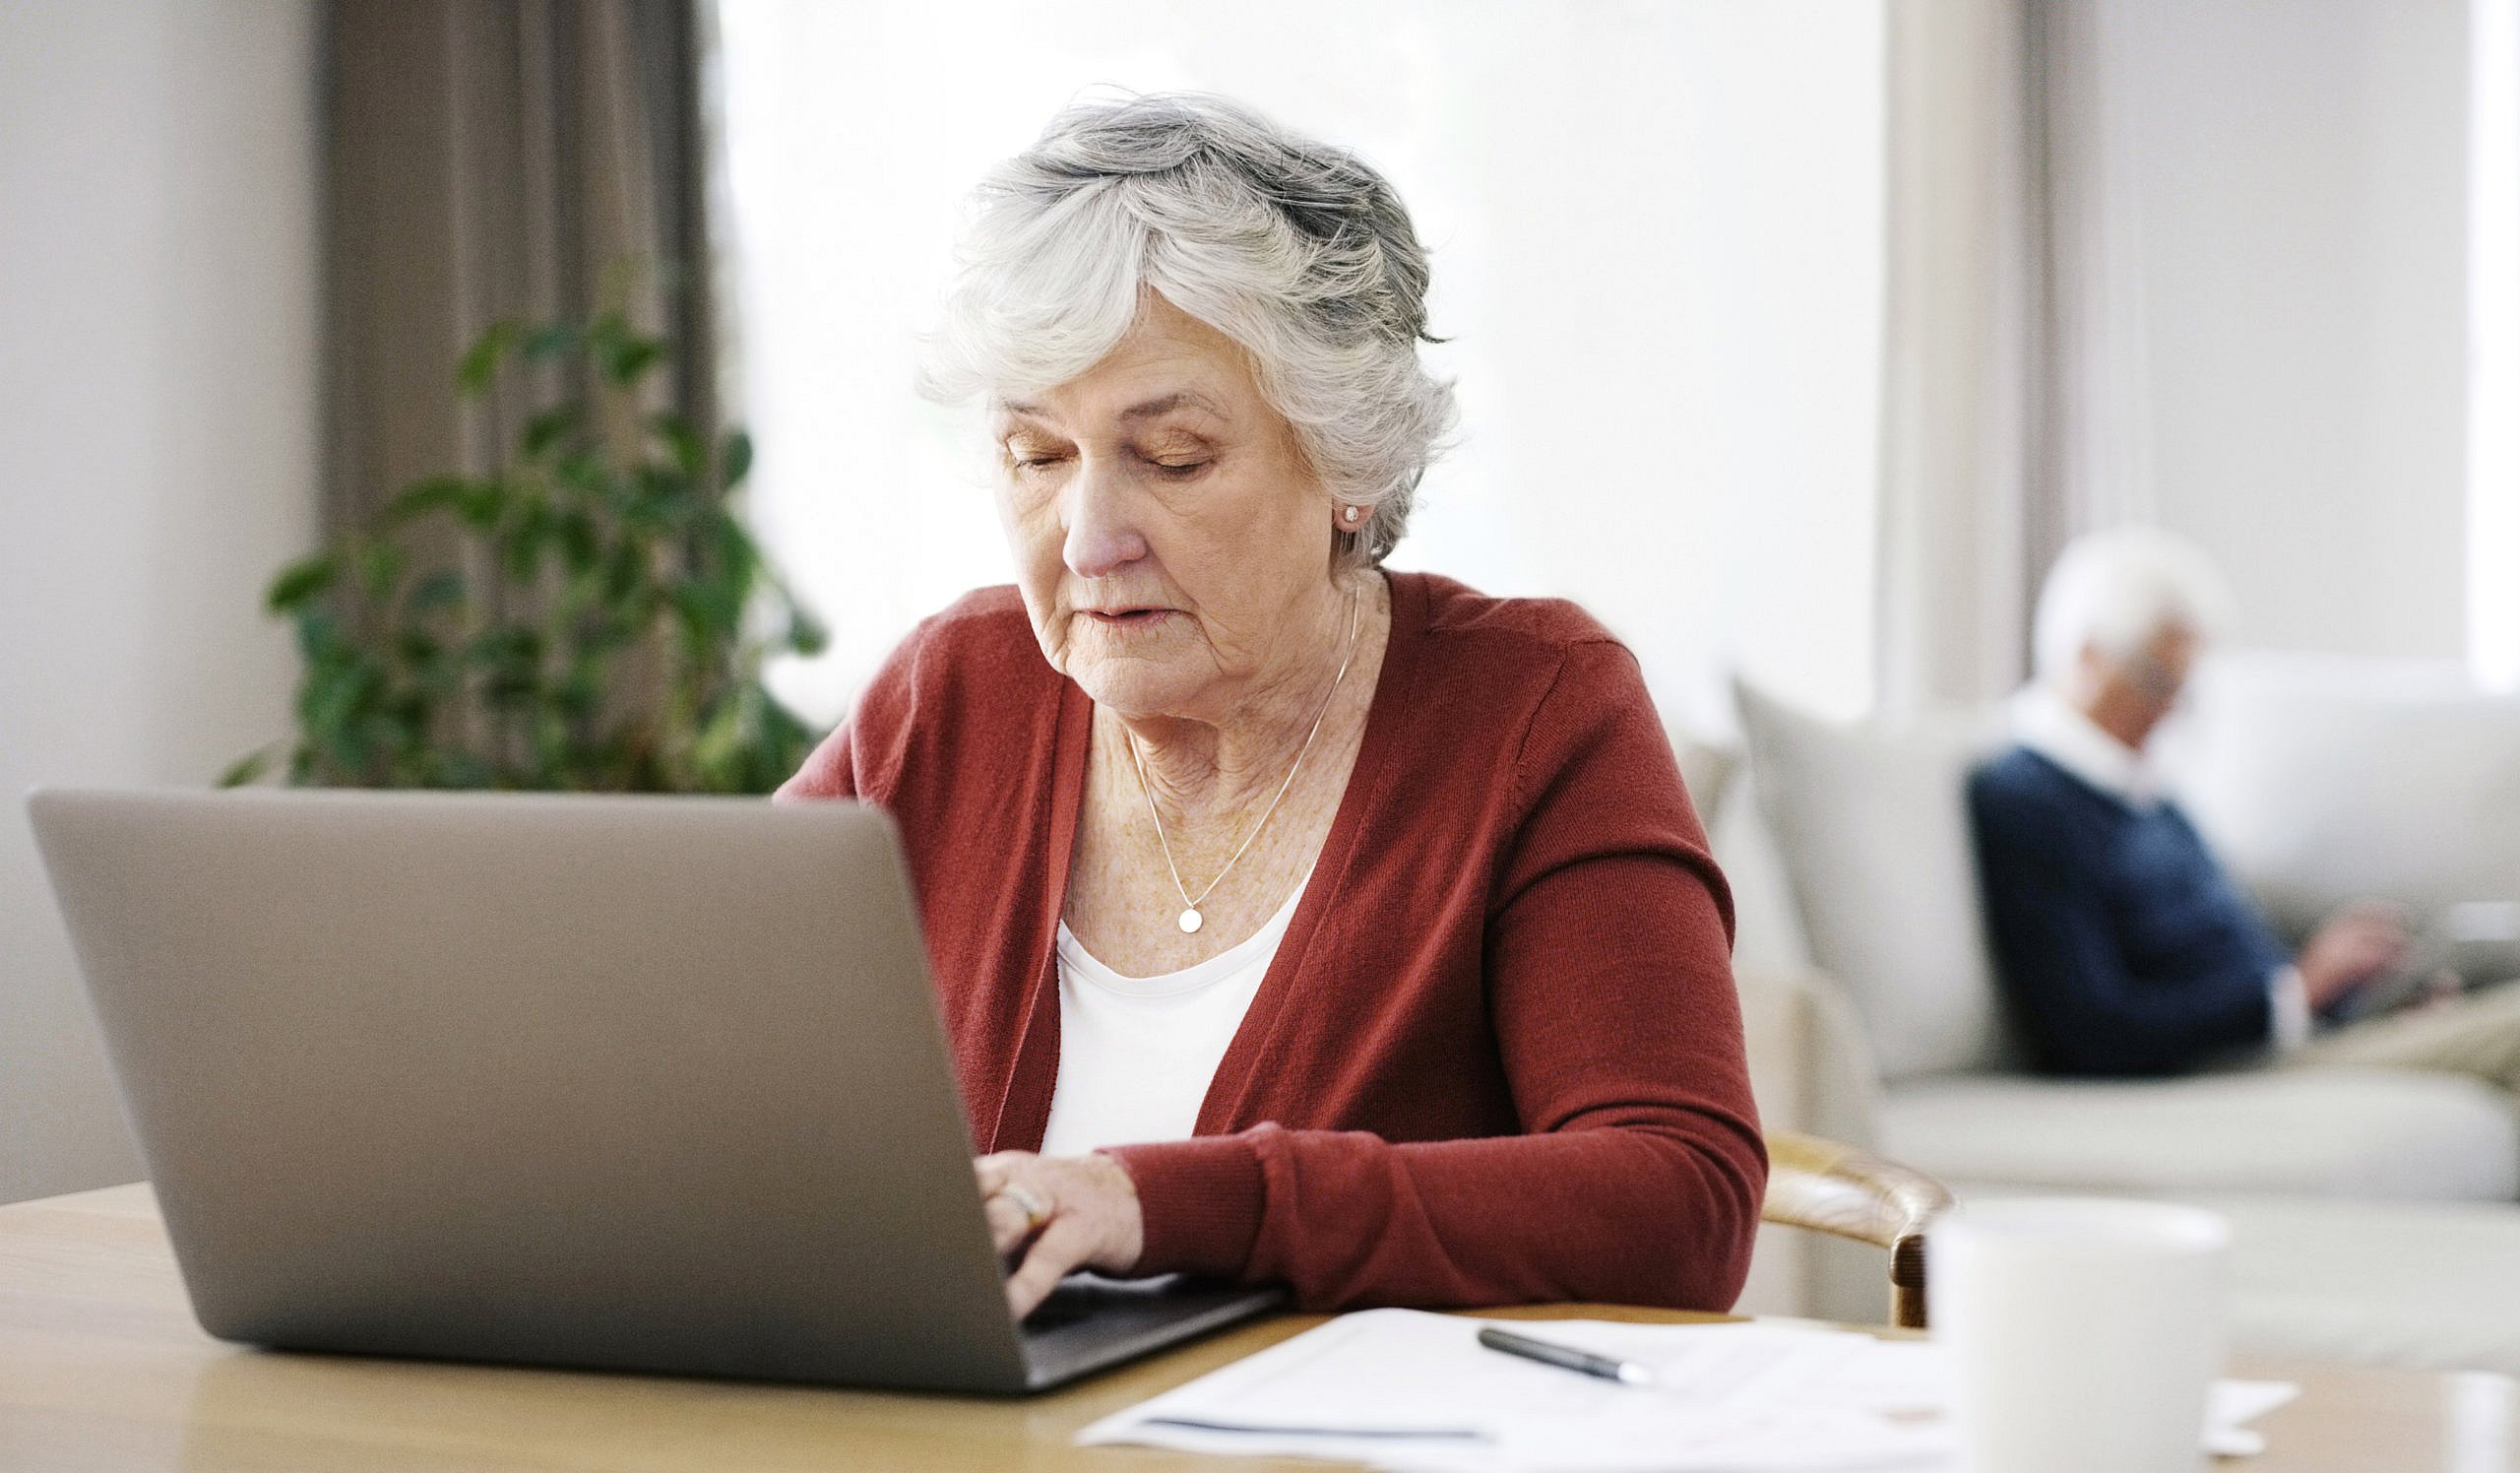 Elderly woman planning her estate online during pandemic.